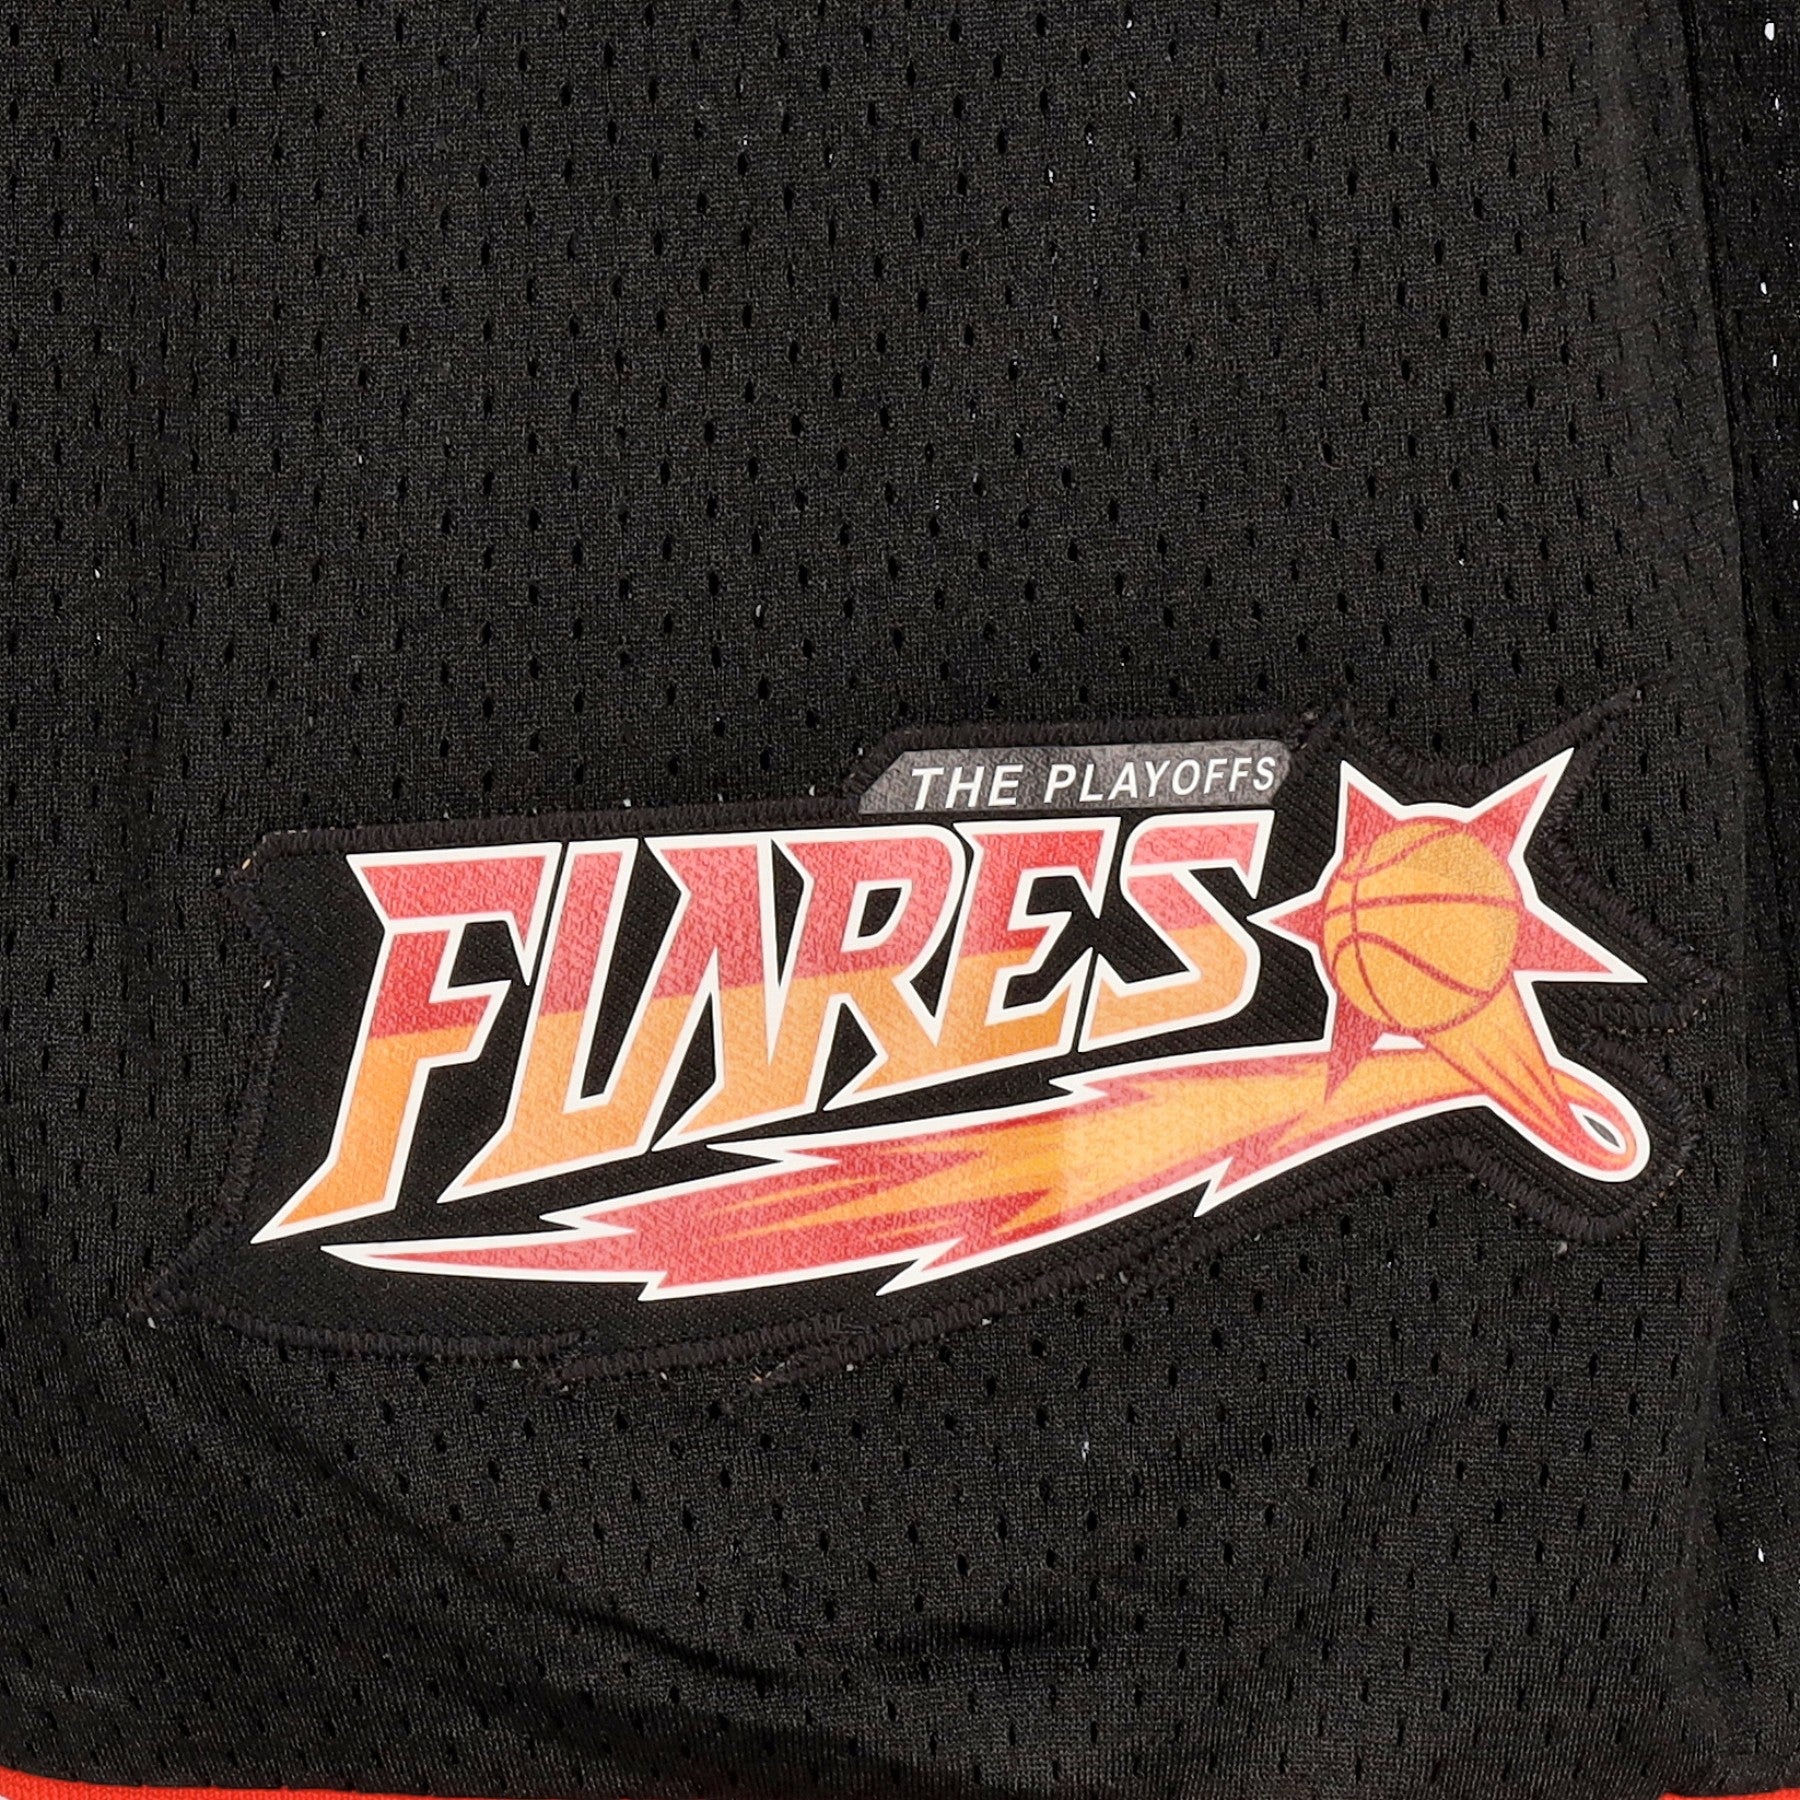 Atipici, Pantaloncino Basket Uomo Basketball Shorts The Playoffs Flares, 